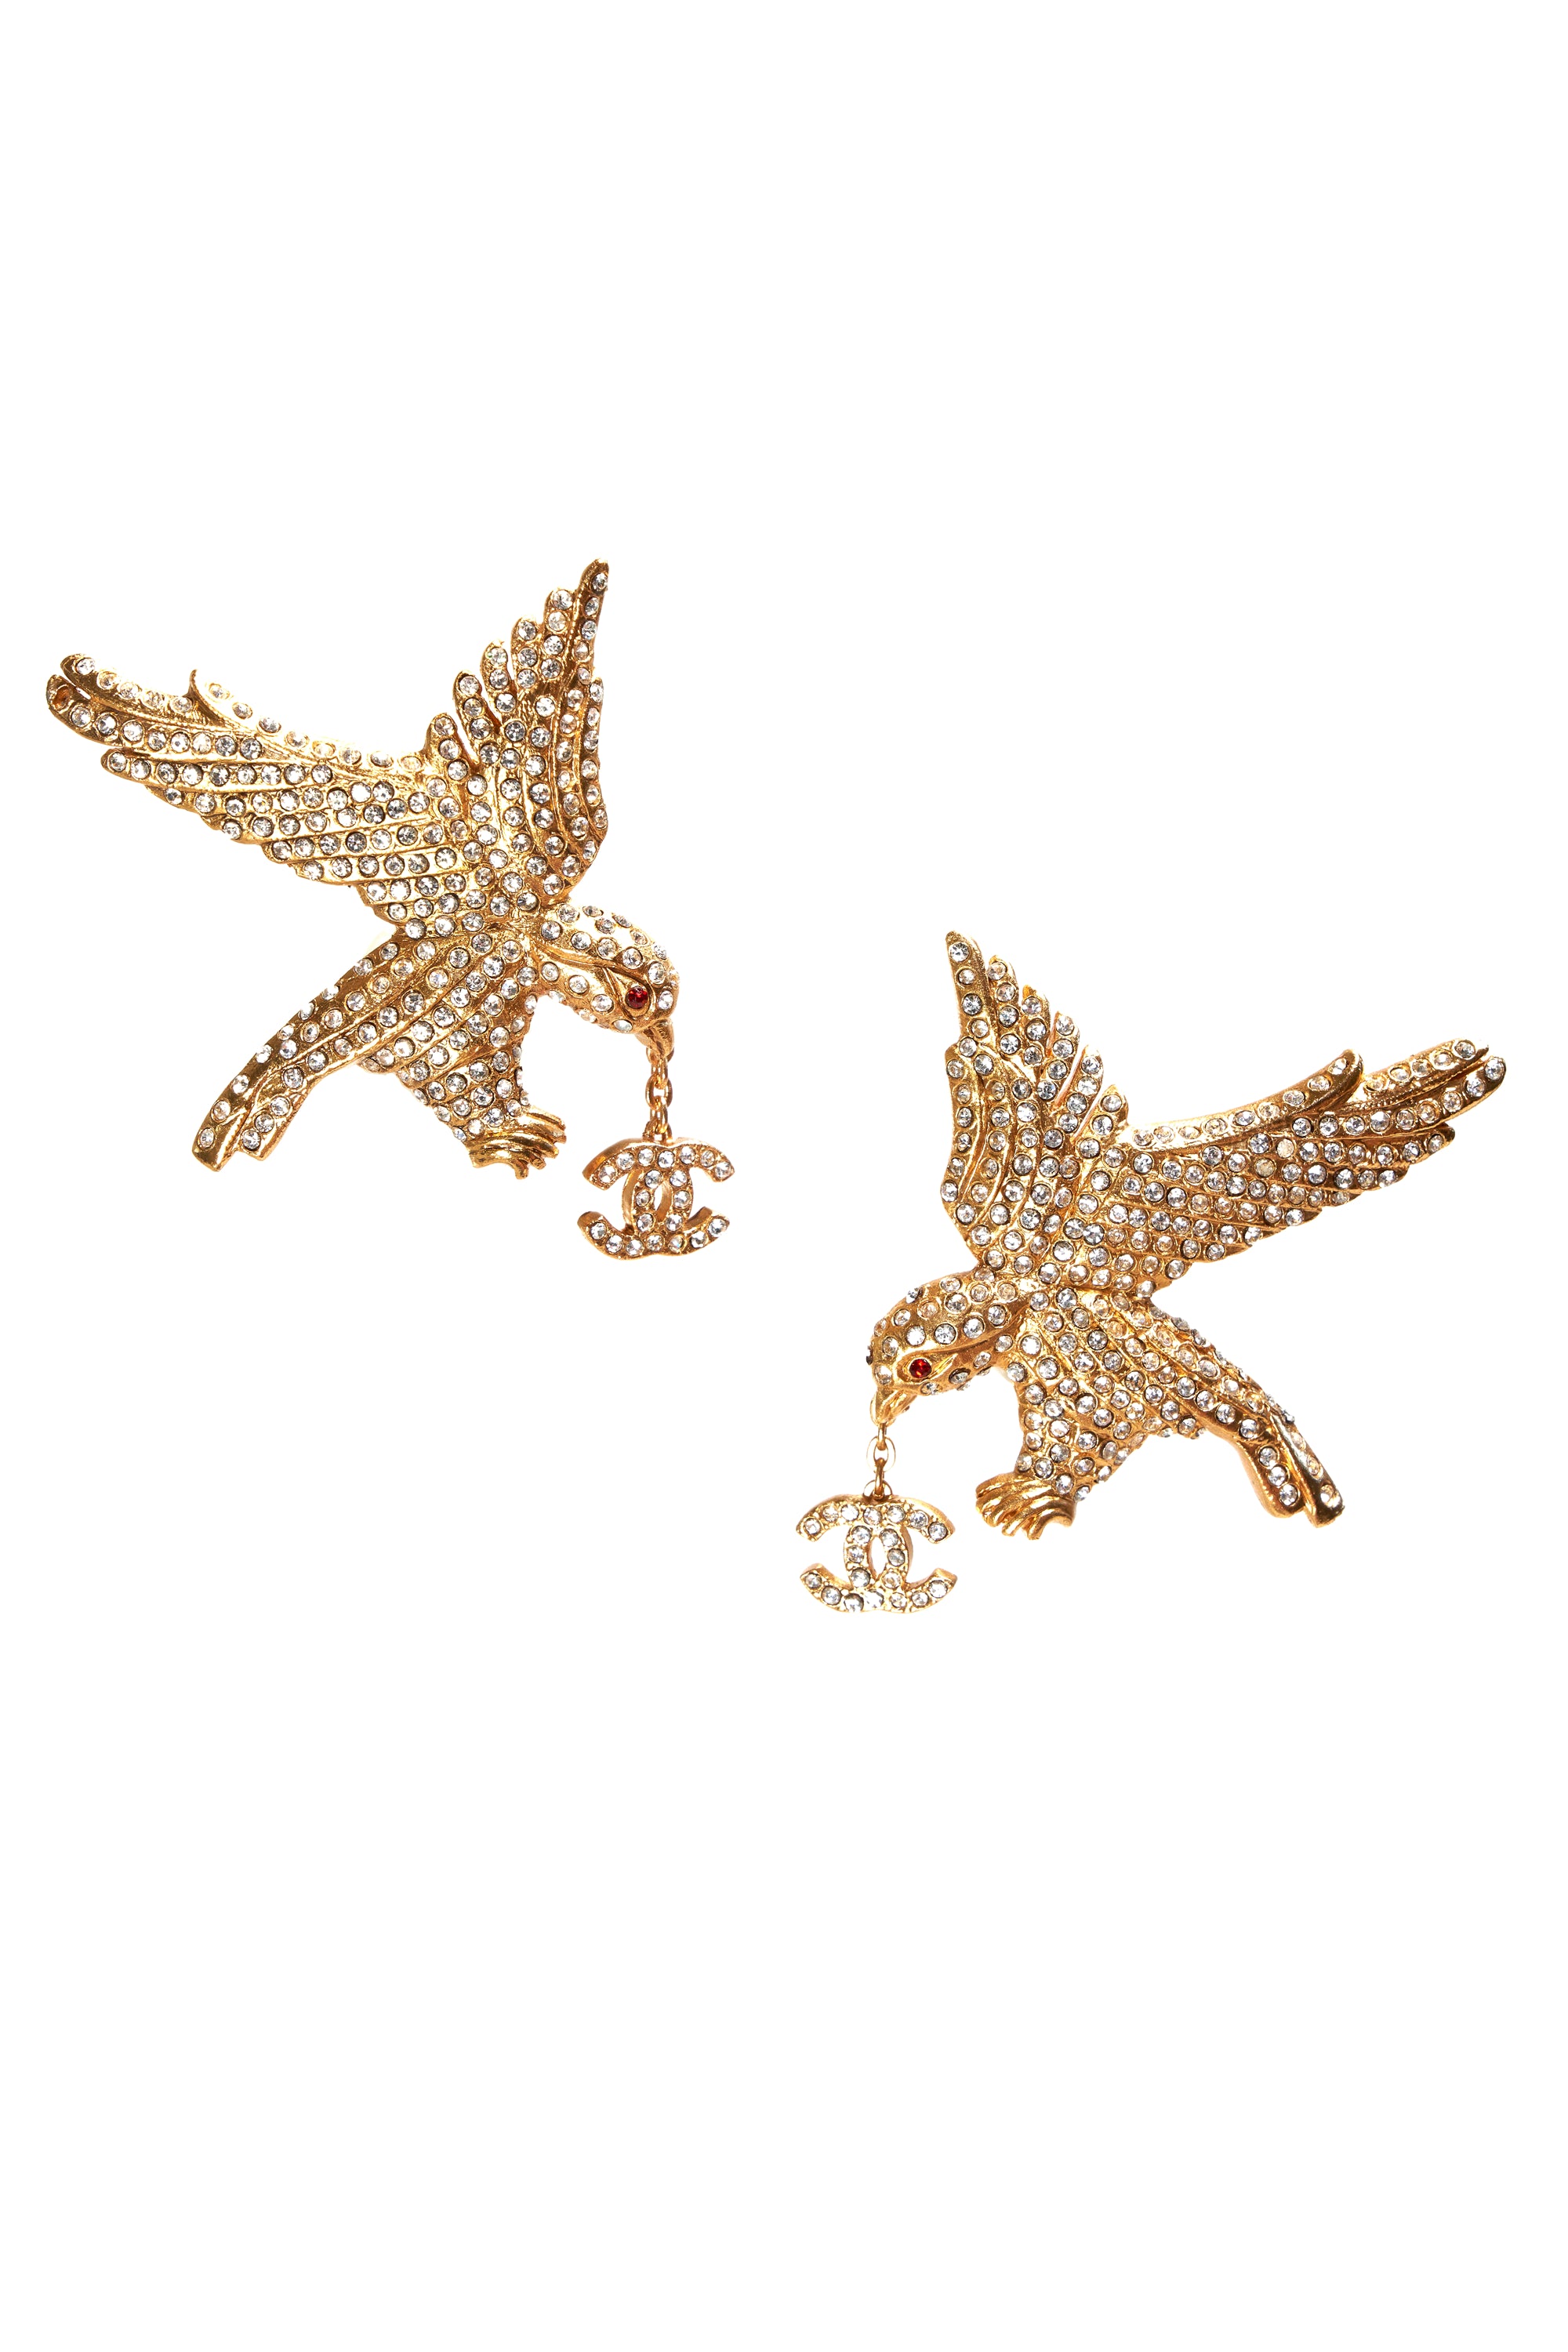 Chanel Vintage 24k Gold Crystal Eagle Clip Earrings 2001P